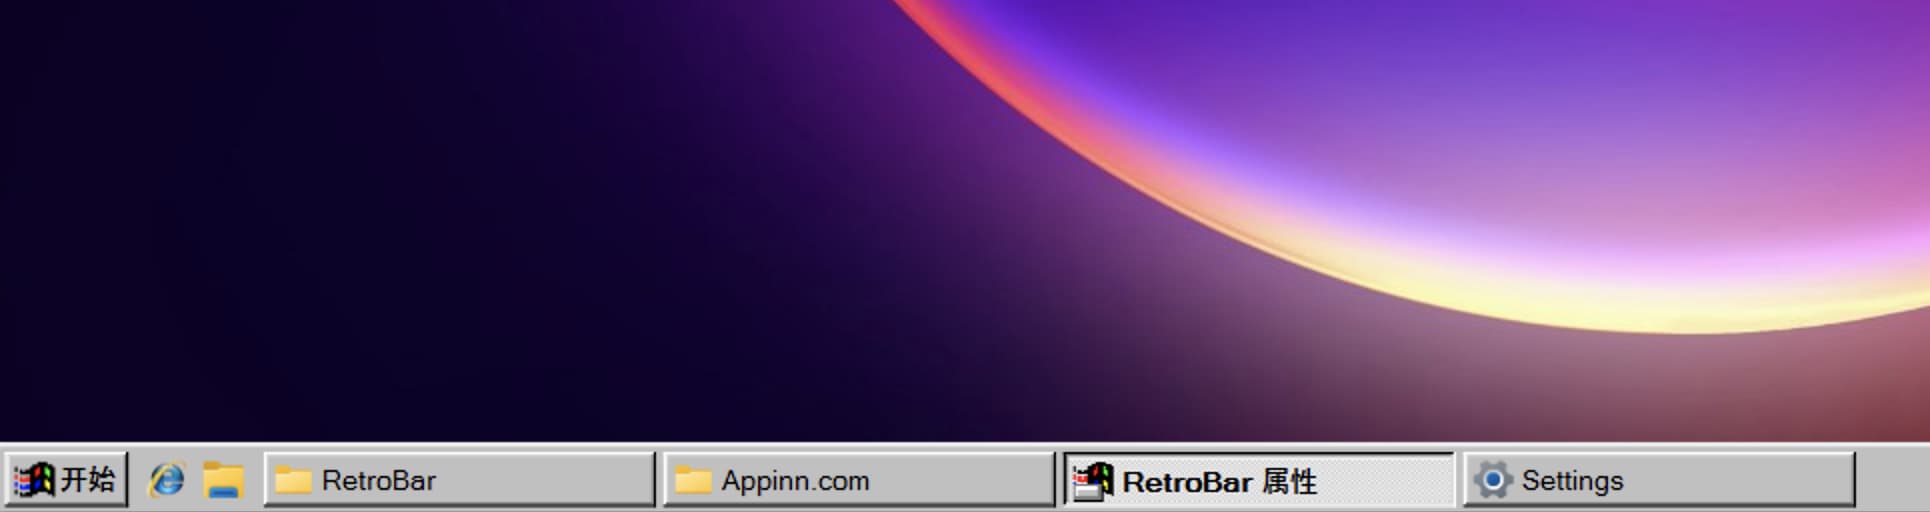 RetroBar - 回到经典 Windows 95、98、Me、2000 或 XP 风格的 Windows 任务栏 3